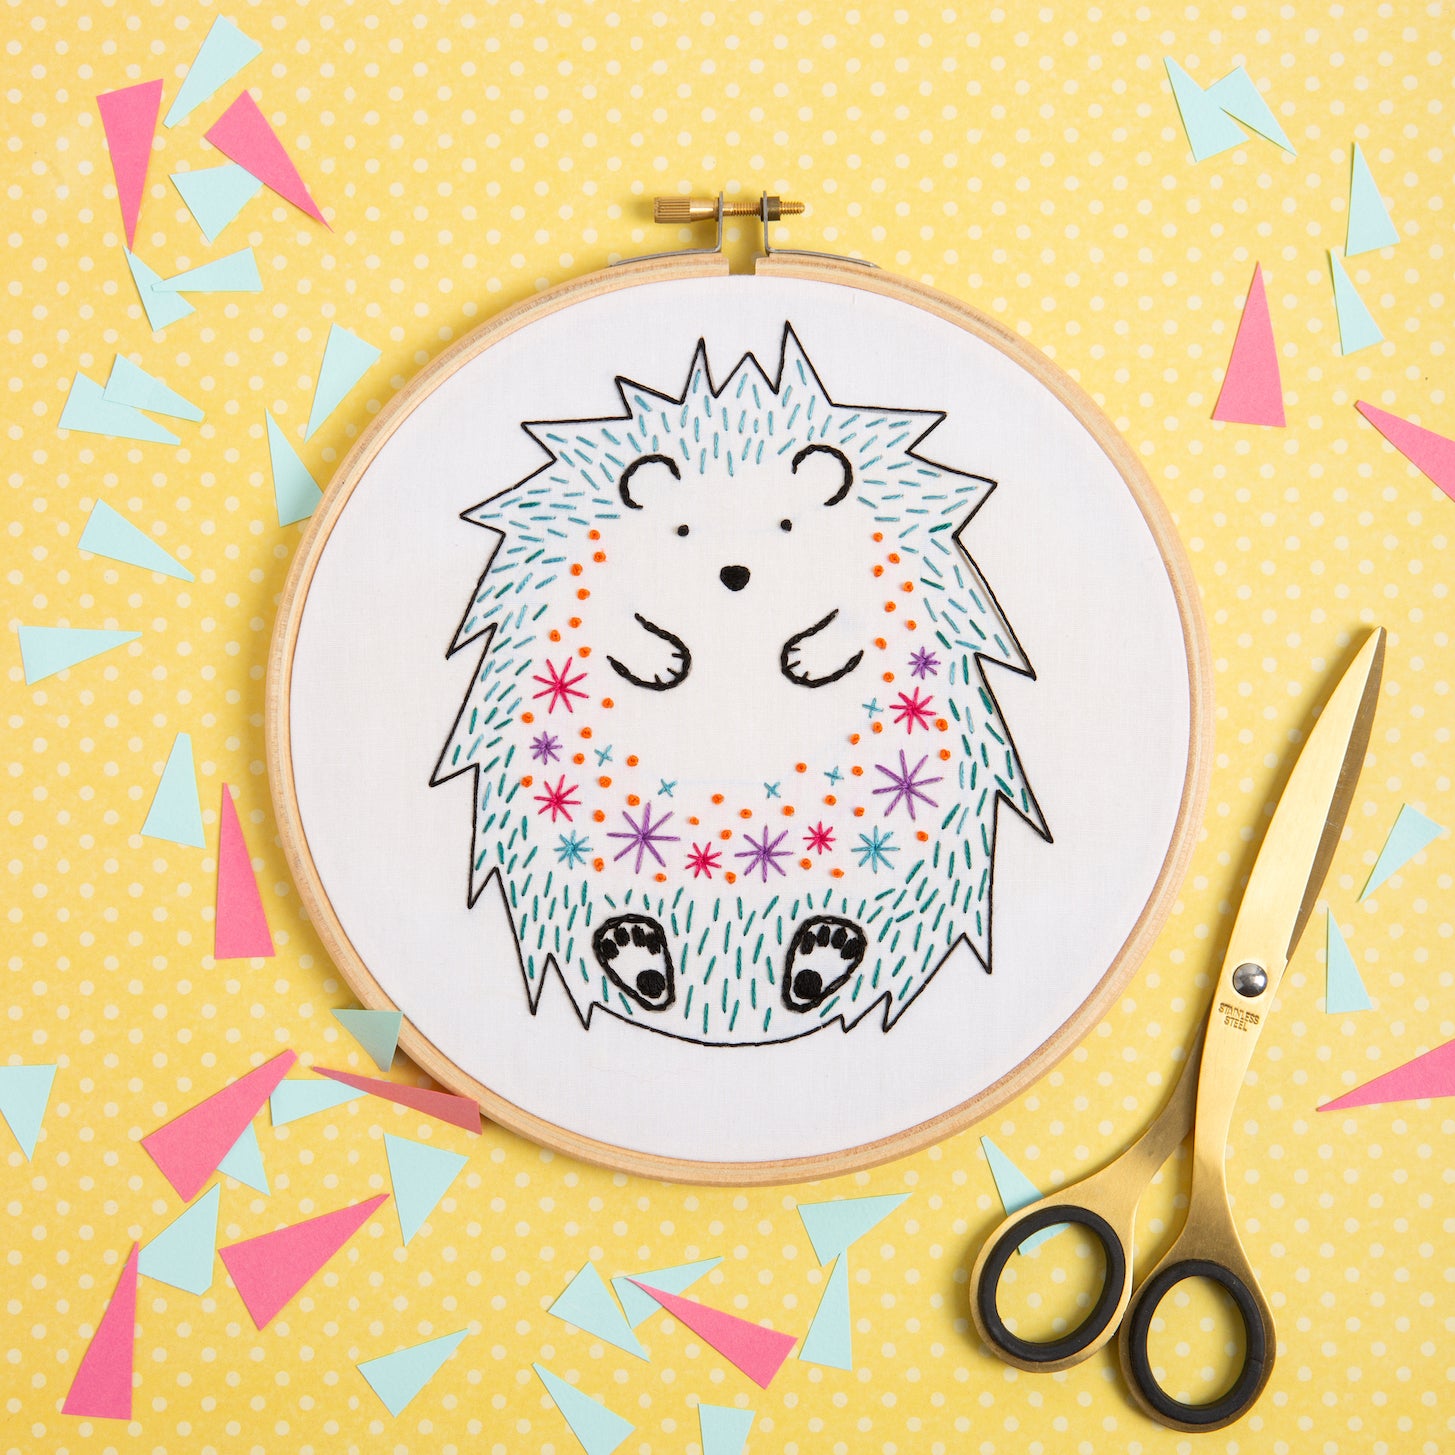 Animal Embroidery Kits